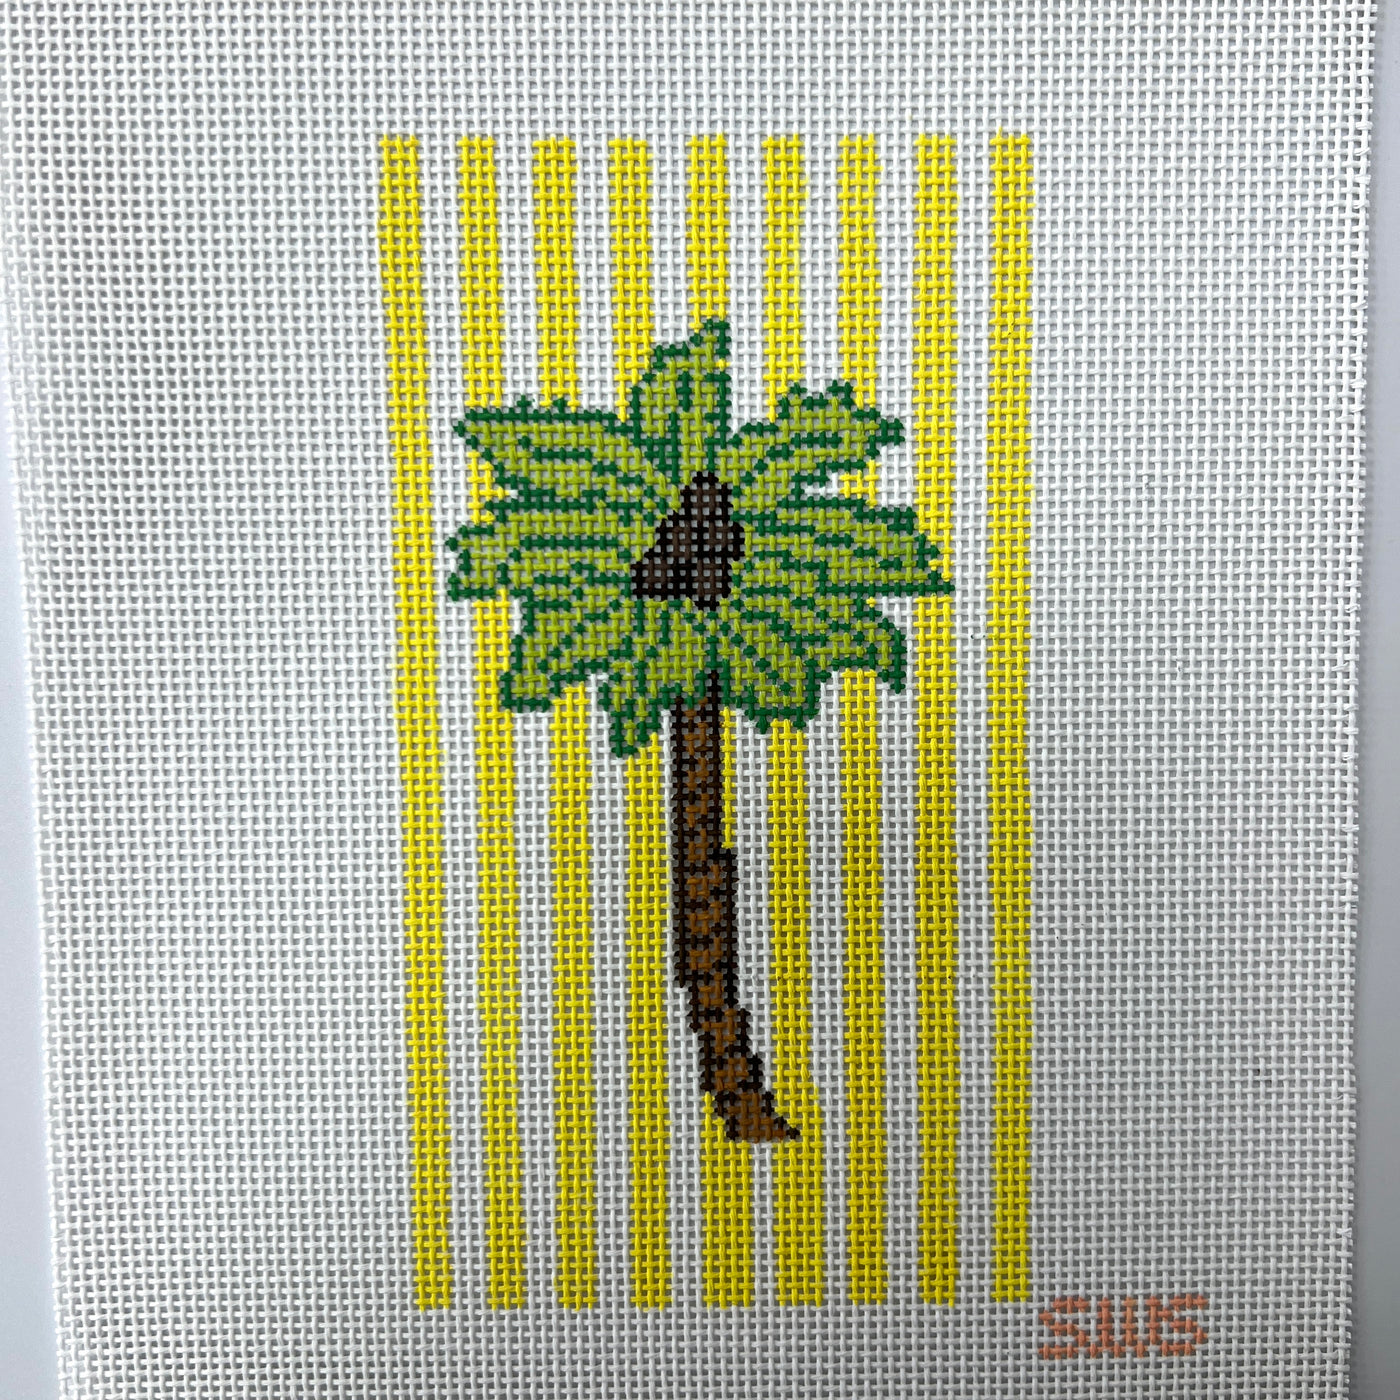 Palm Tree Eyeglass Case Needlepoint Canvas